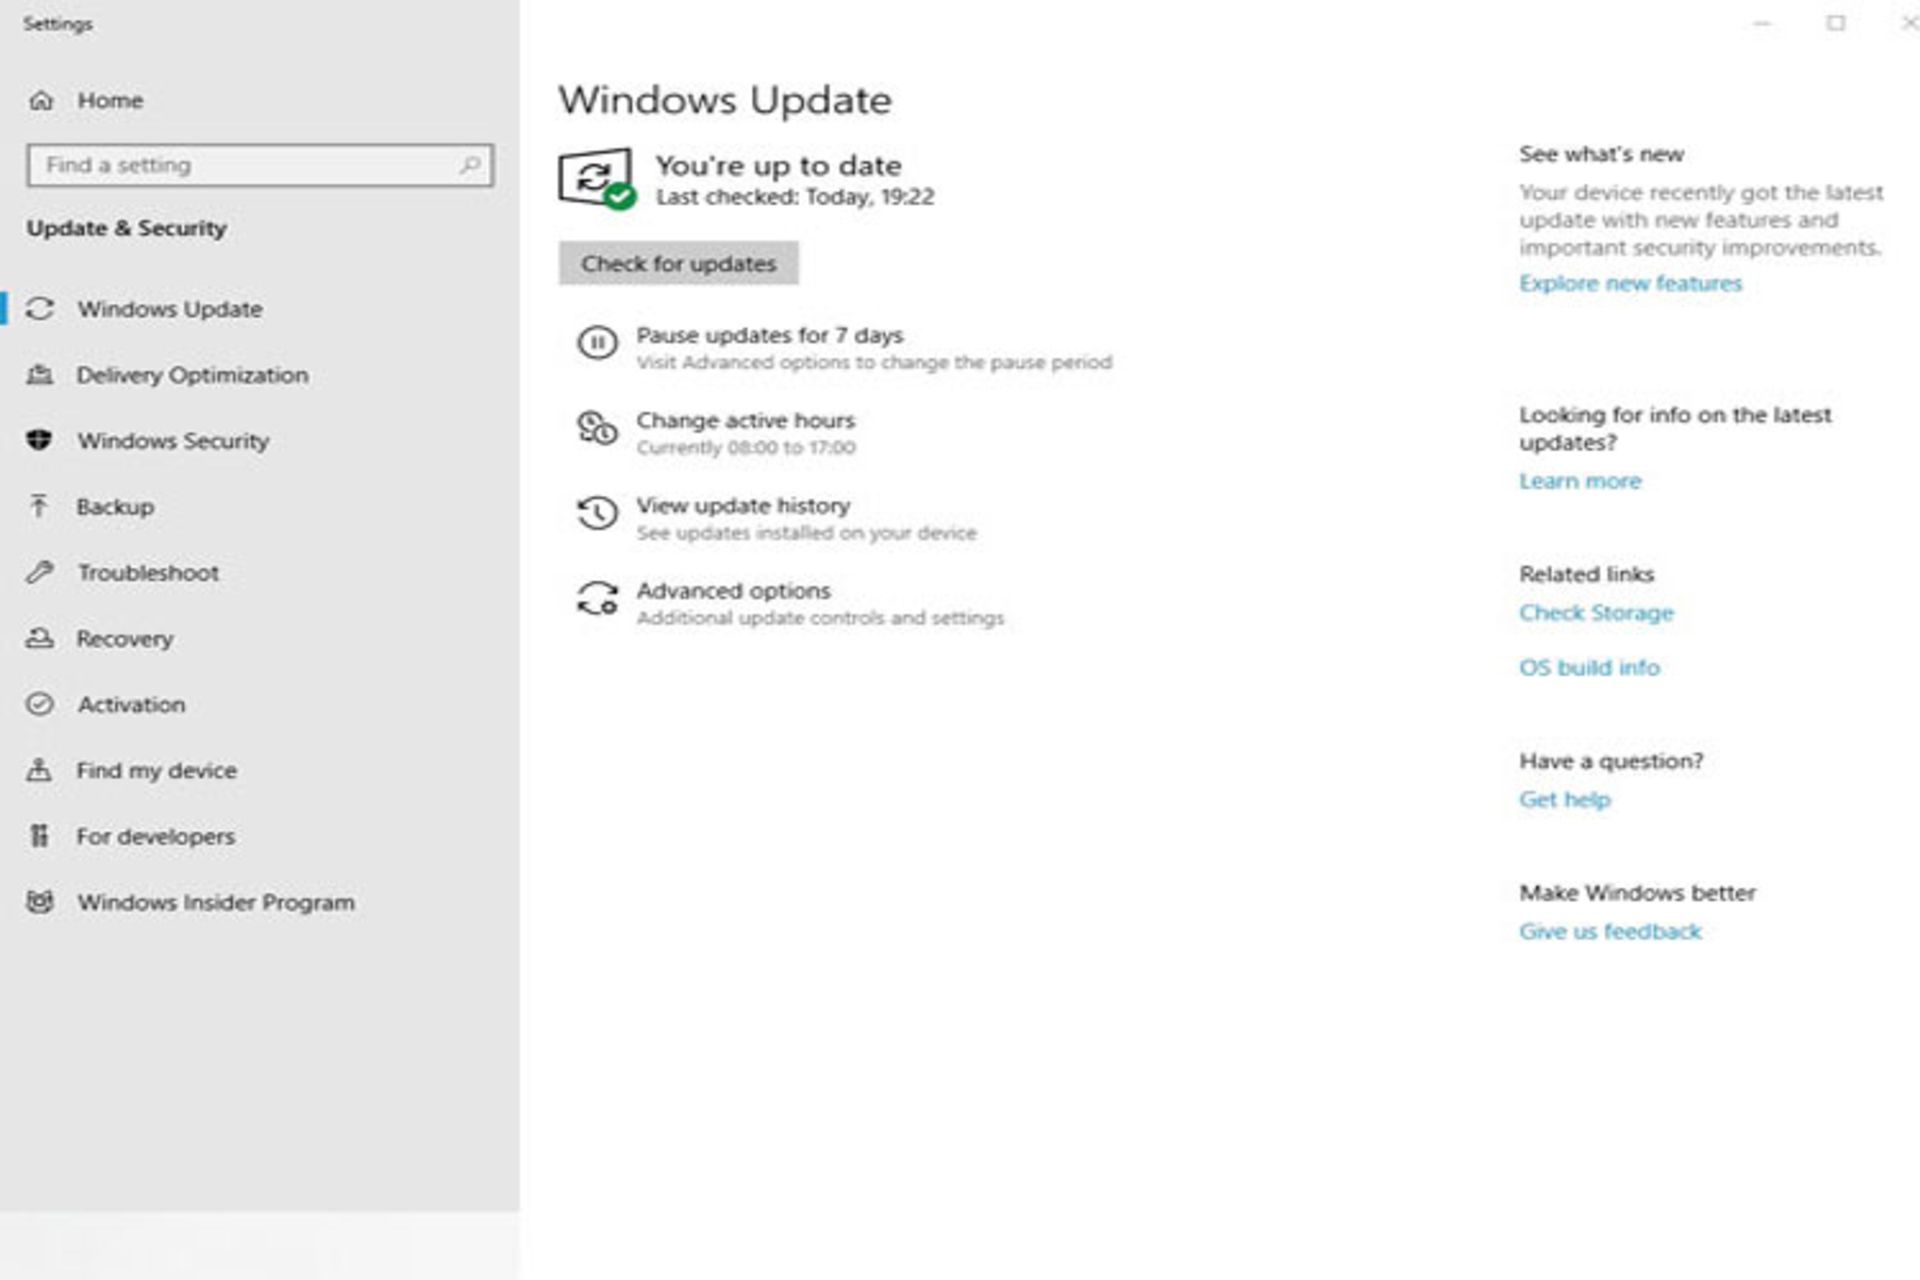 Windows 10 19H1 Update